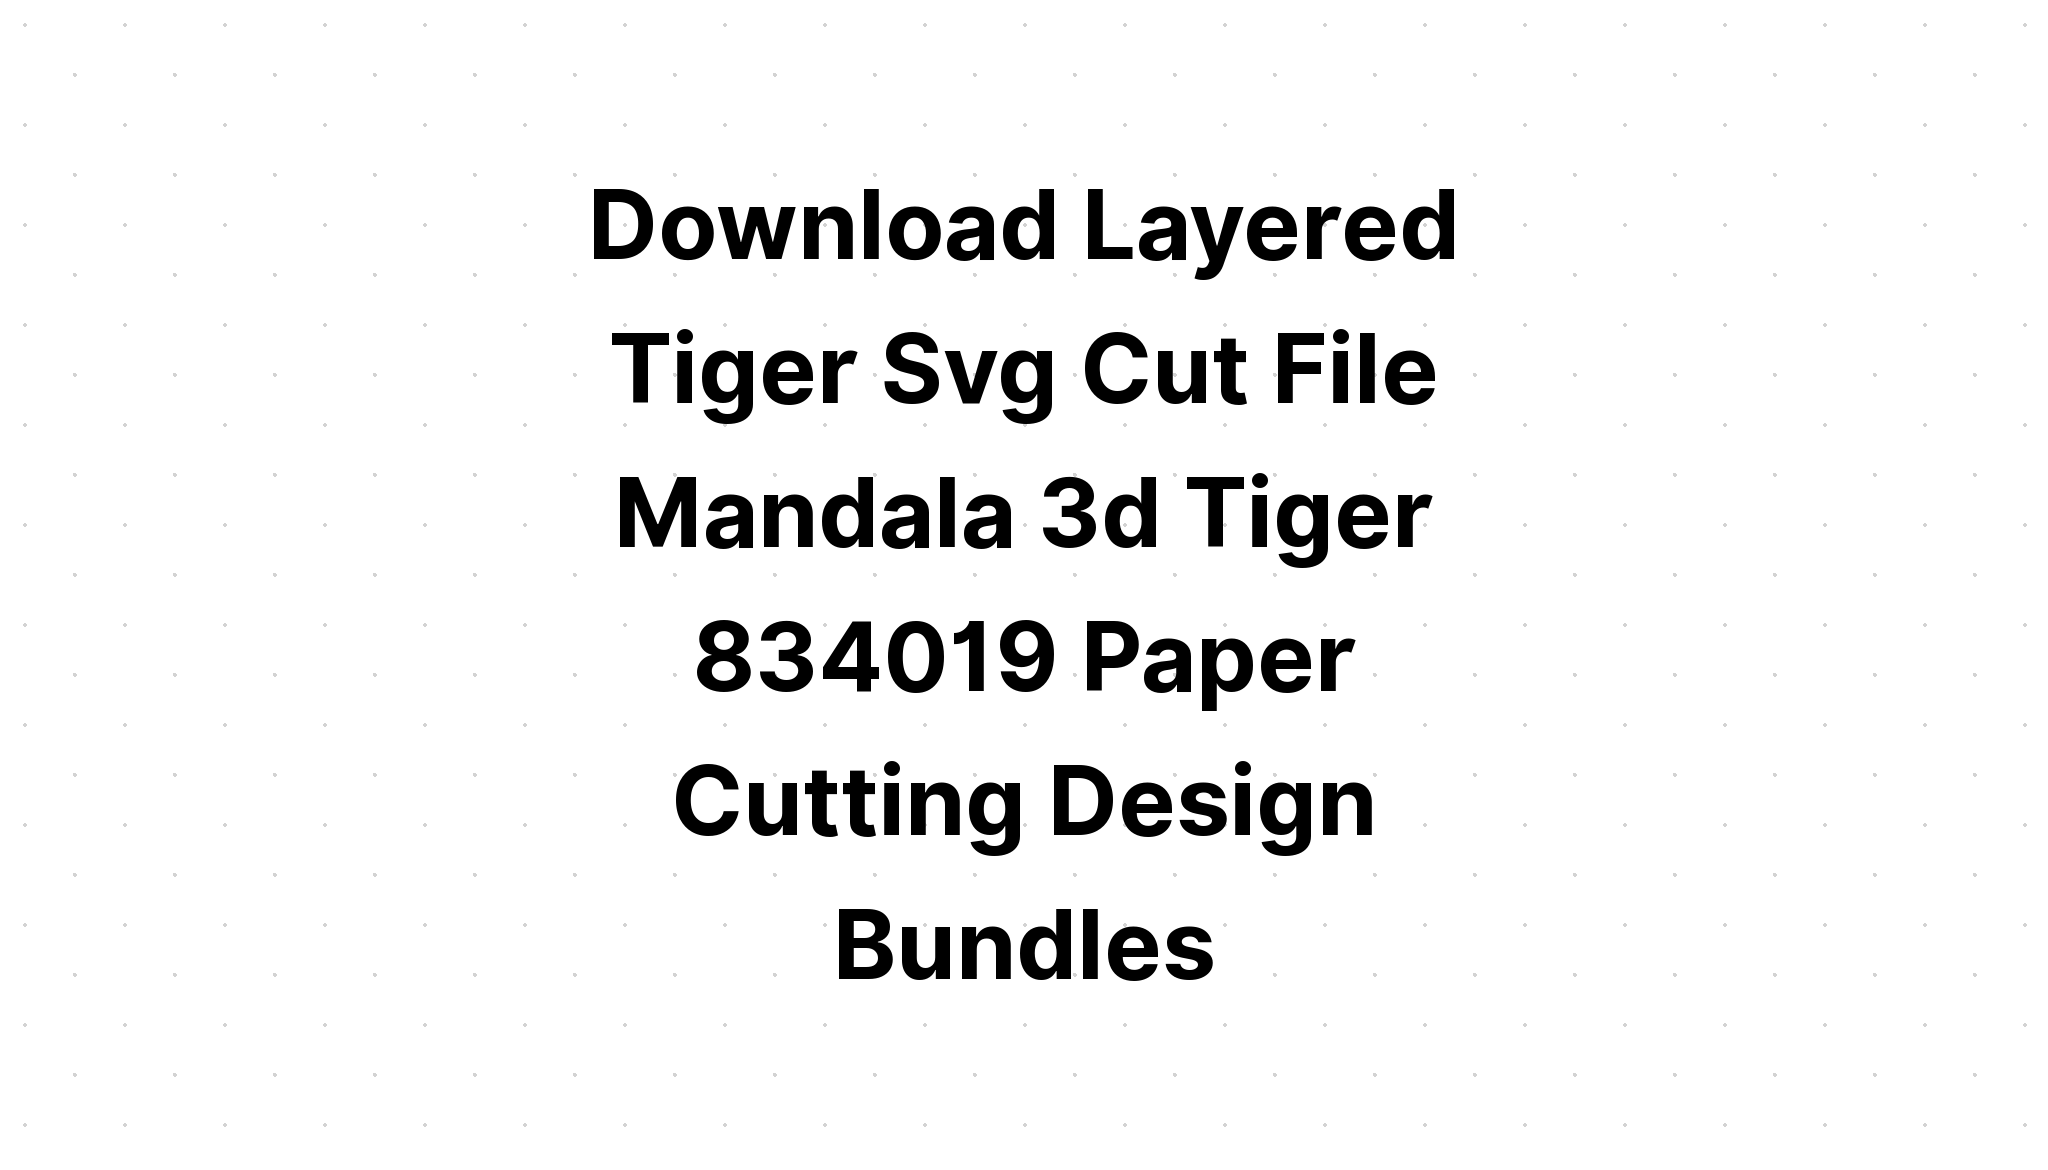 Download Layered Mandala Tiger Svg - Free SVG Cut File